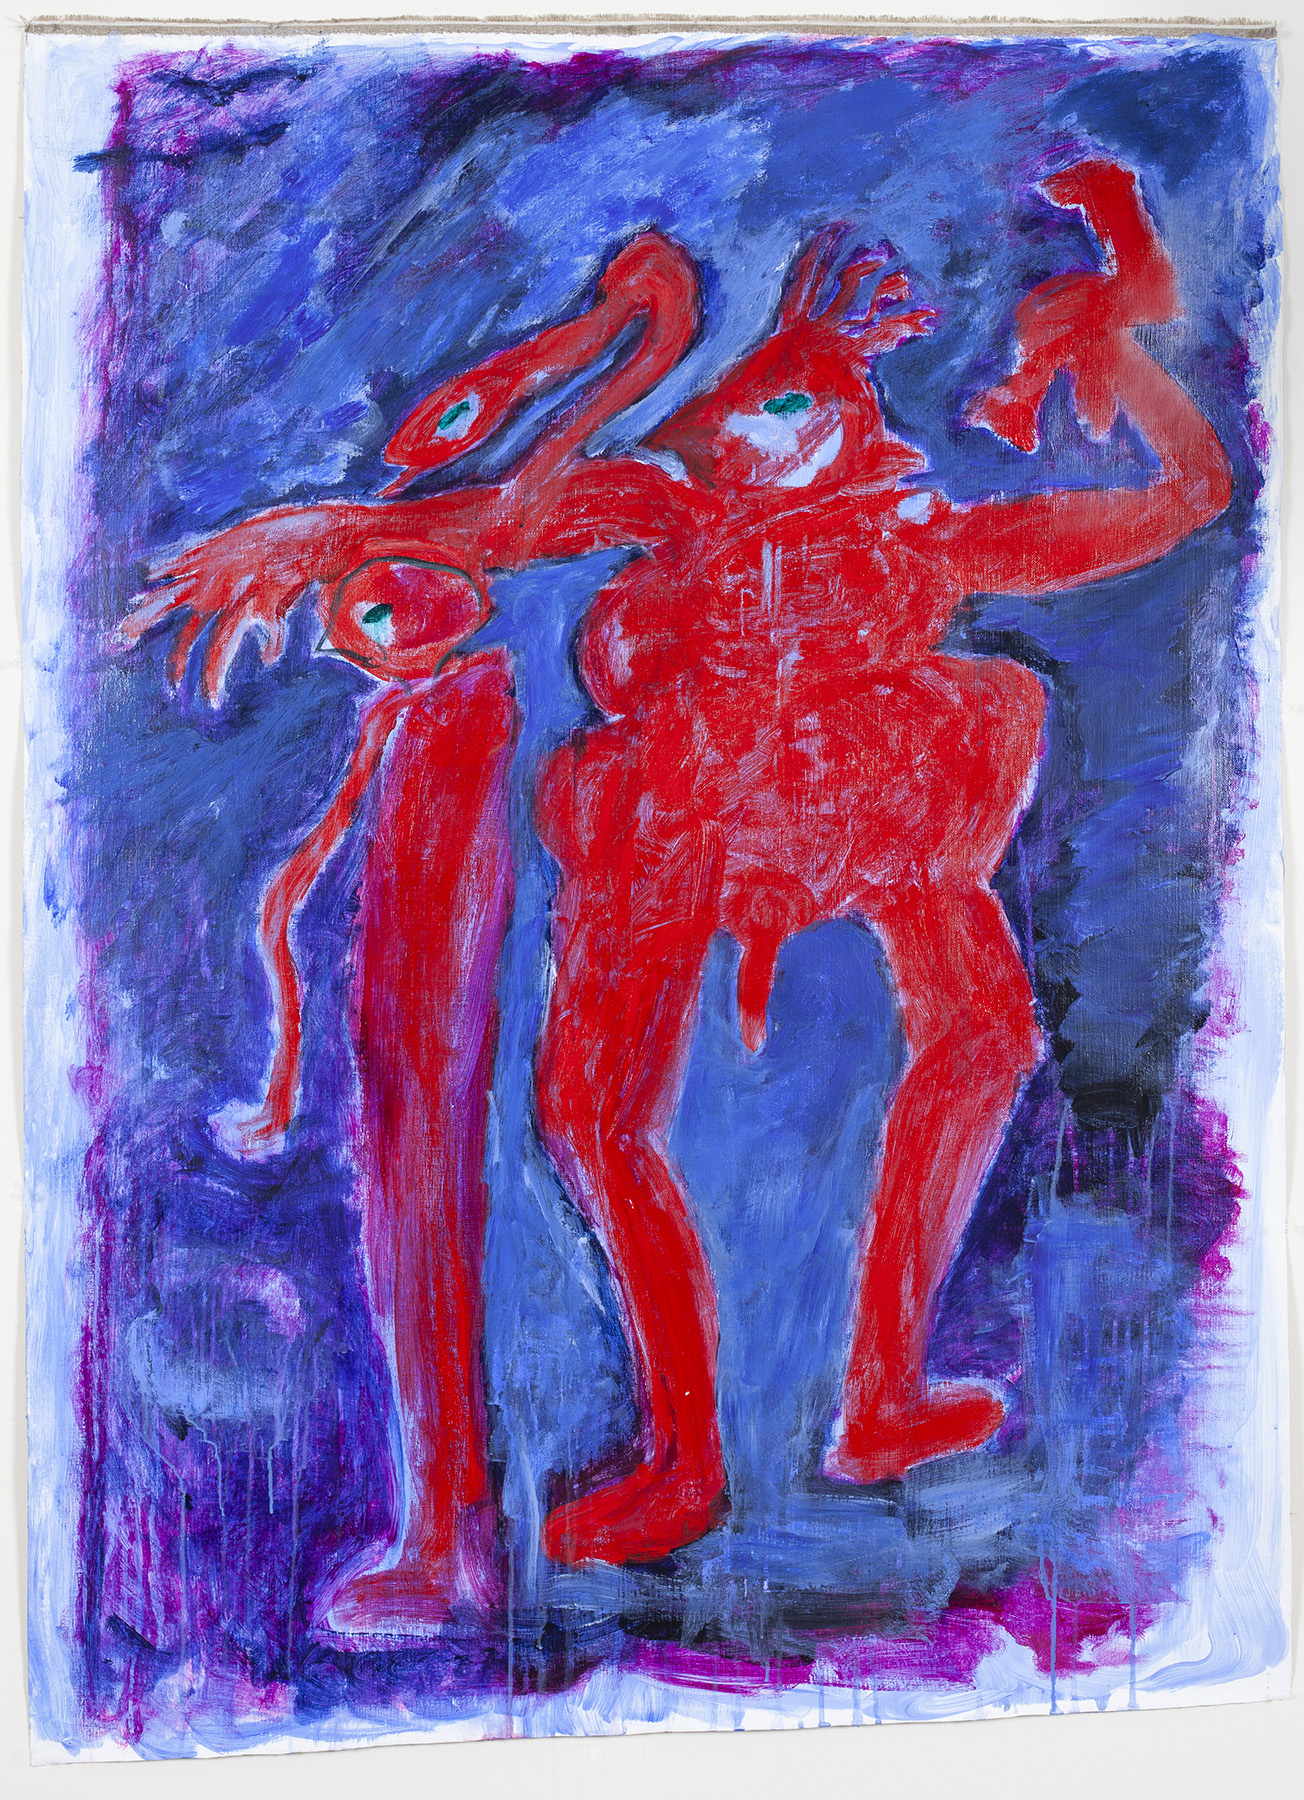 2.) Ono, Diable. 2018.  Acrylic on canvas, 39.25 in x 54 in (99.7 cm x 137.2 cm).jpg